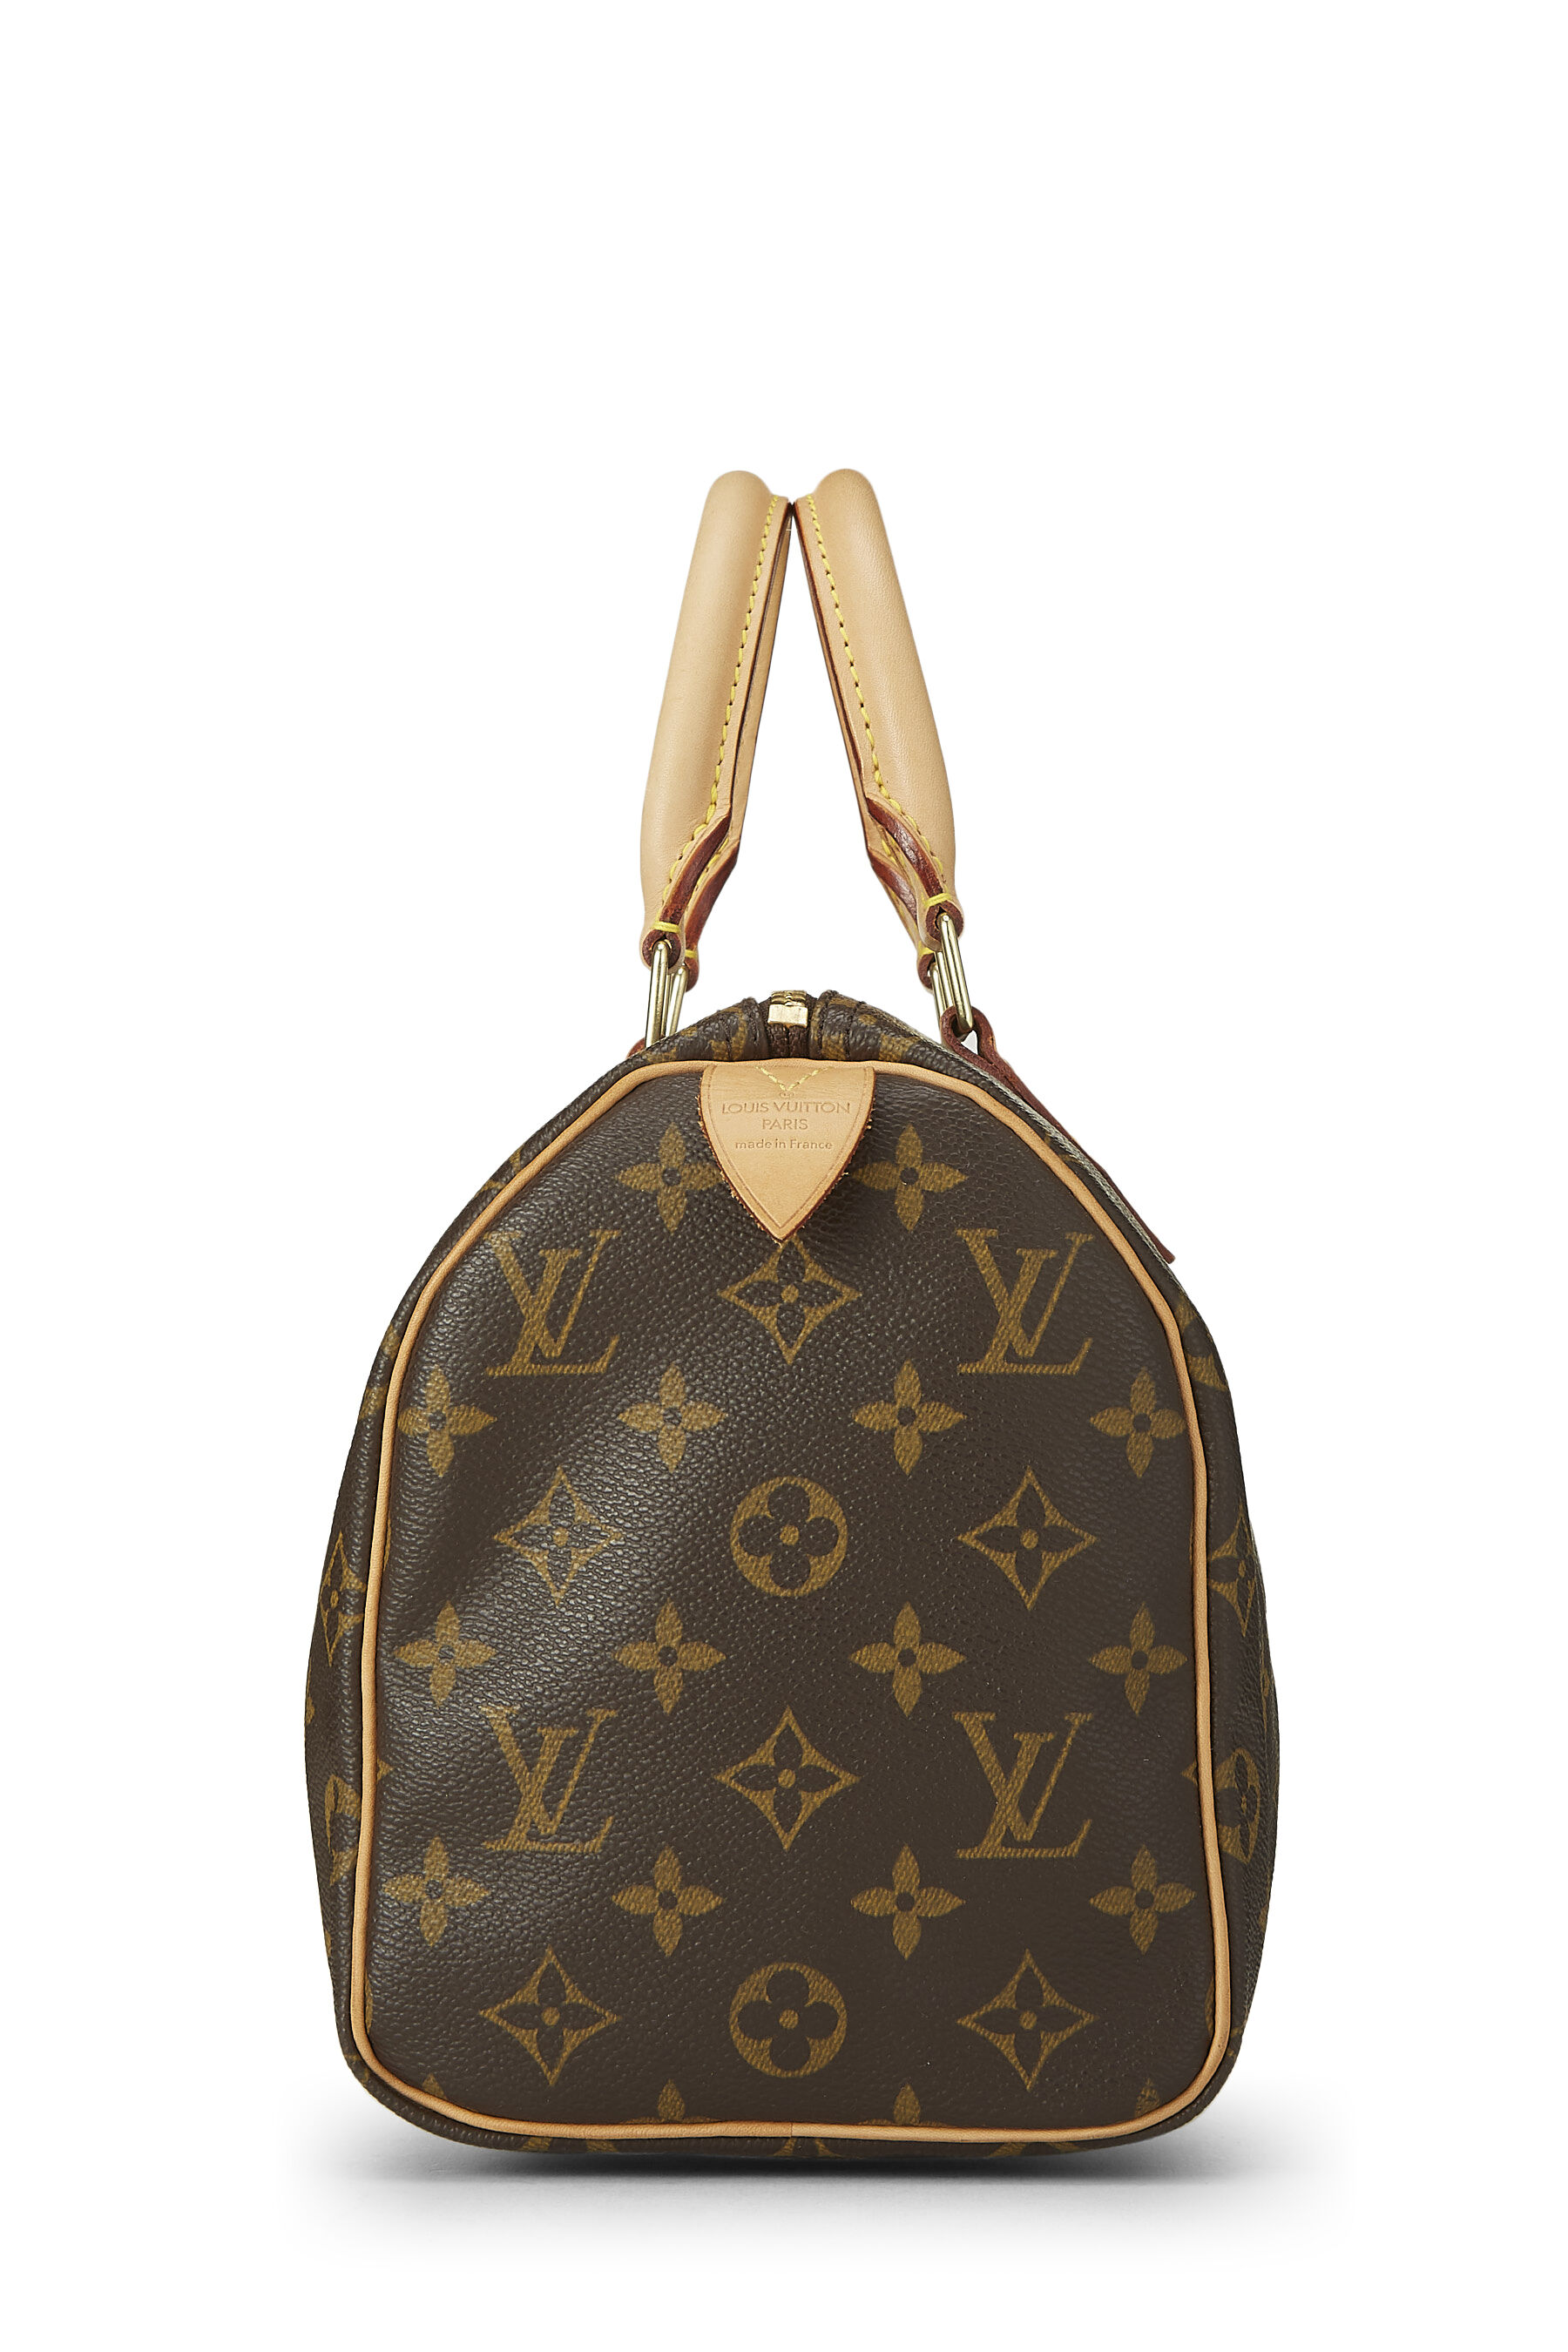 BlackPink Jisoo with Louis Vuitton Speedy 25.High quality LV bag for sale  buy add my WhatsApp: 1 323 659 4999 EVA pickwomenbag.com :  u/Illustrious-Cut-1263